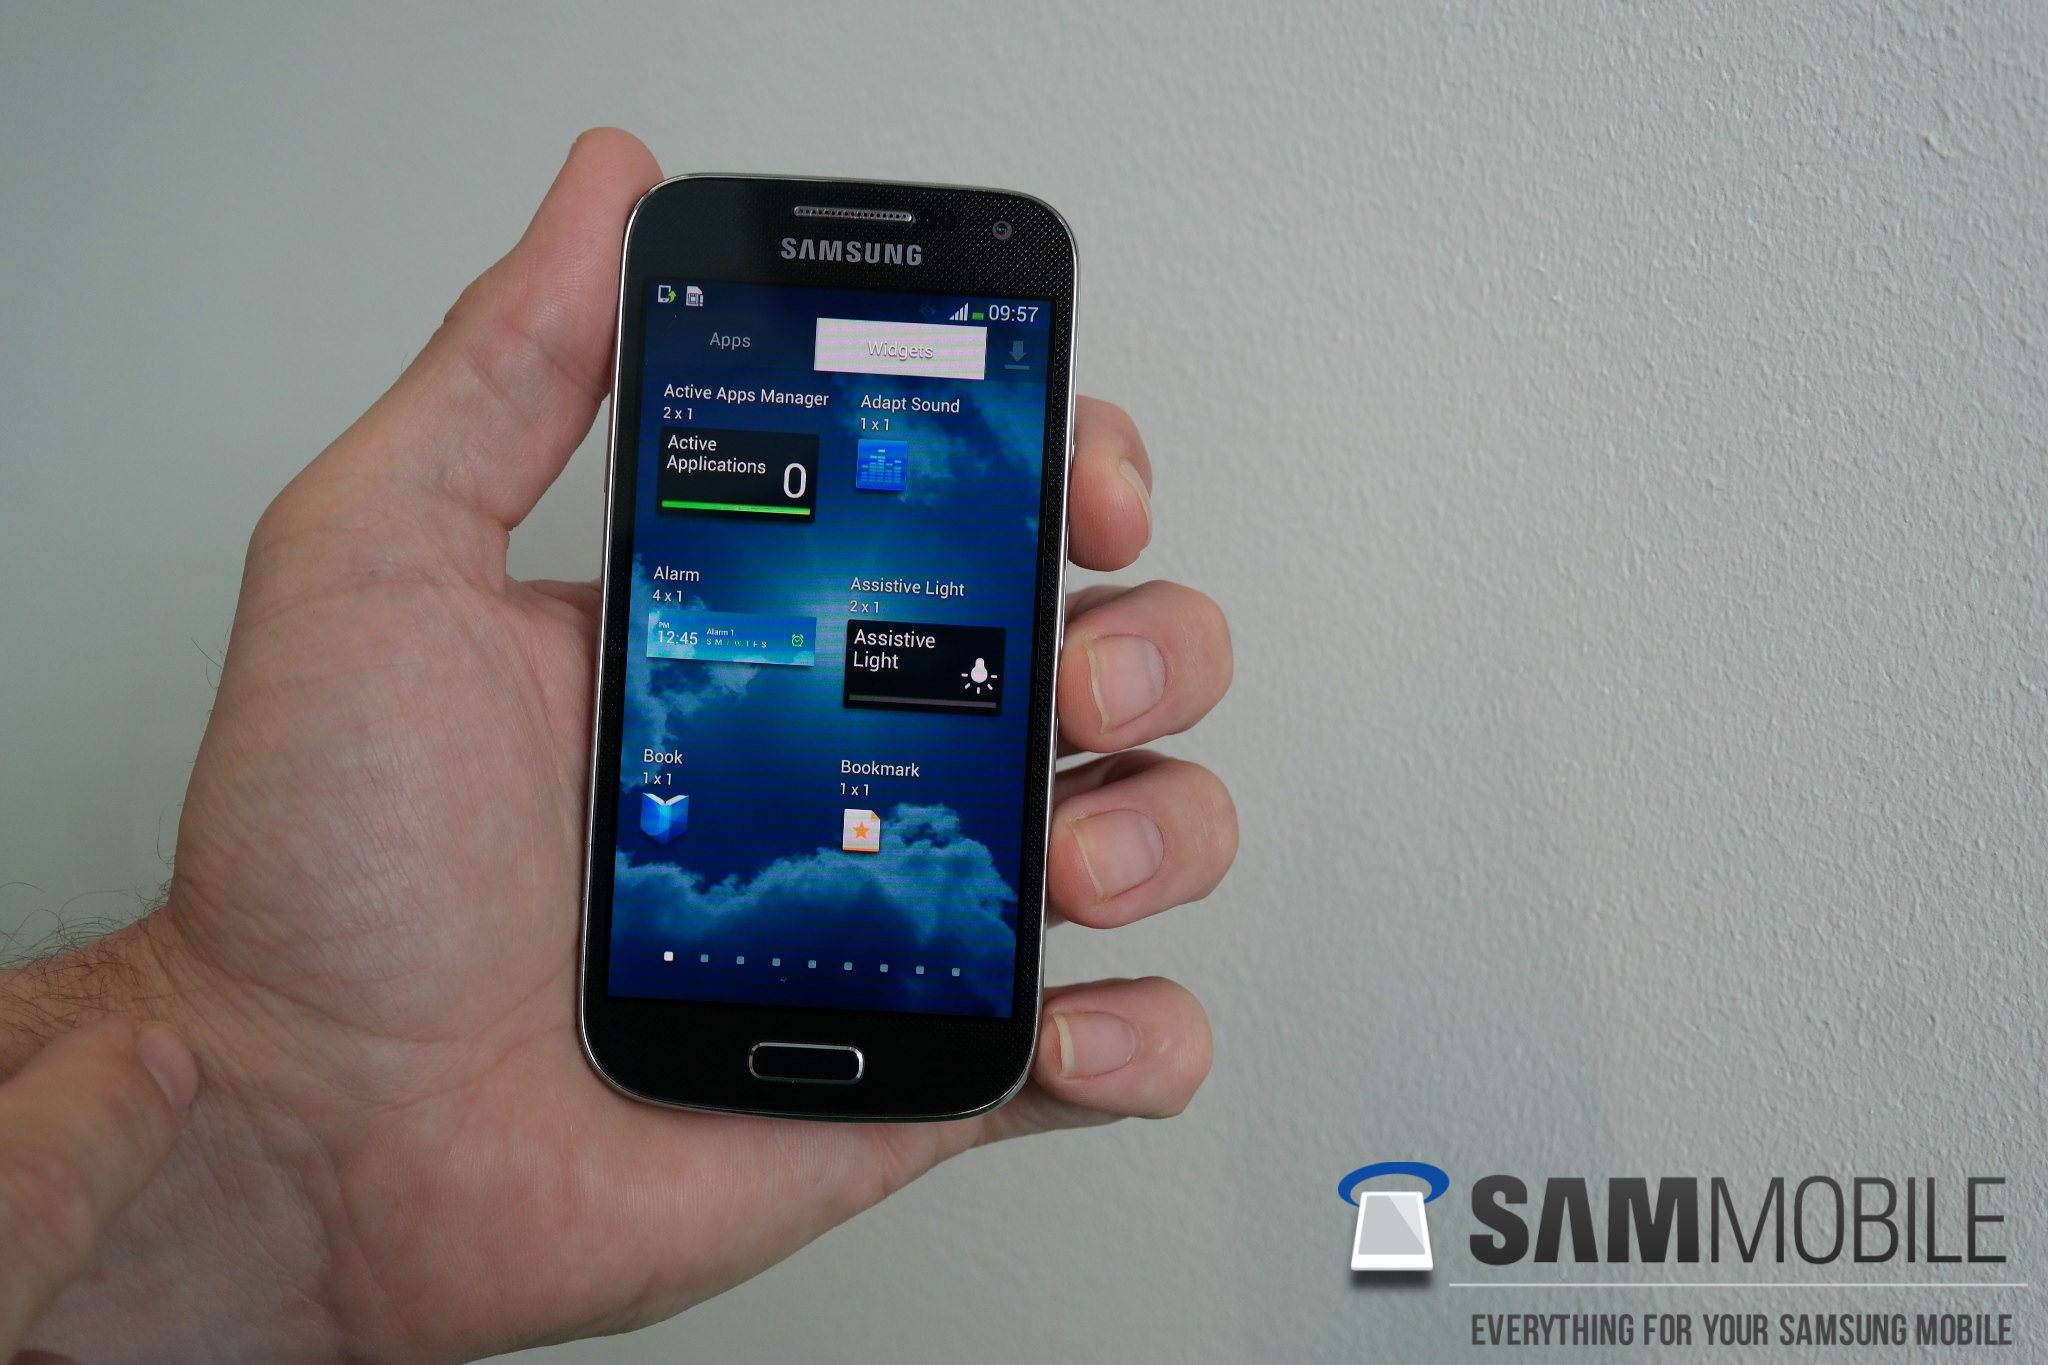 Colonial crisis import Review: Samsung Galaxy S4 mini (GT-I9195) - SamMobile - SamMobile